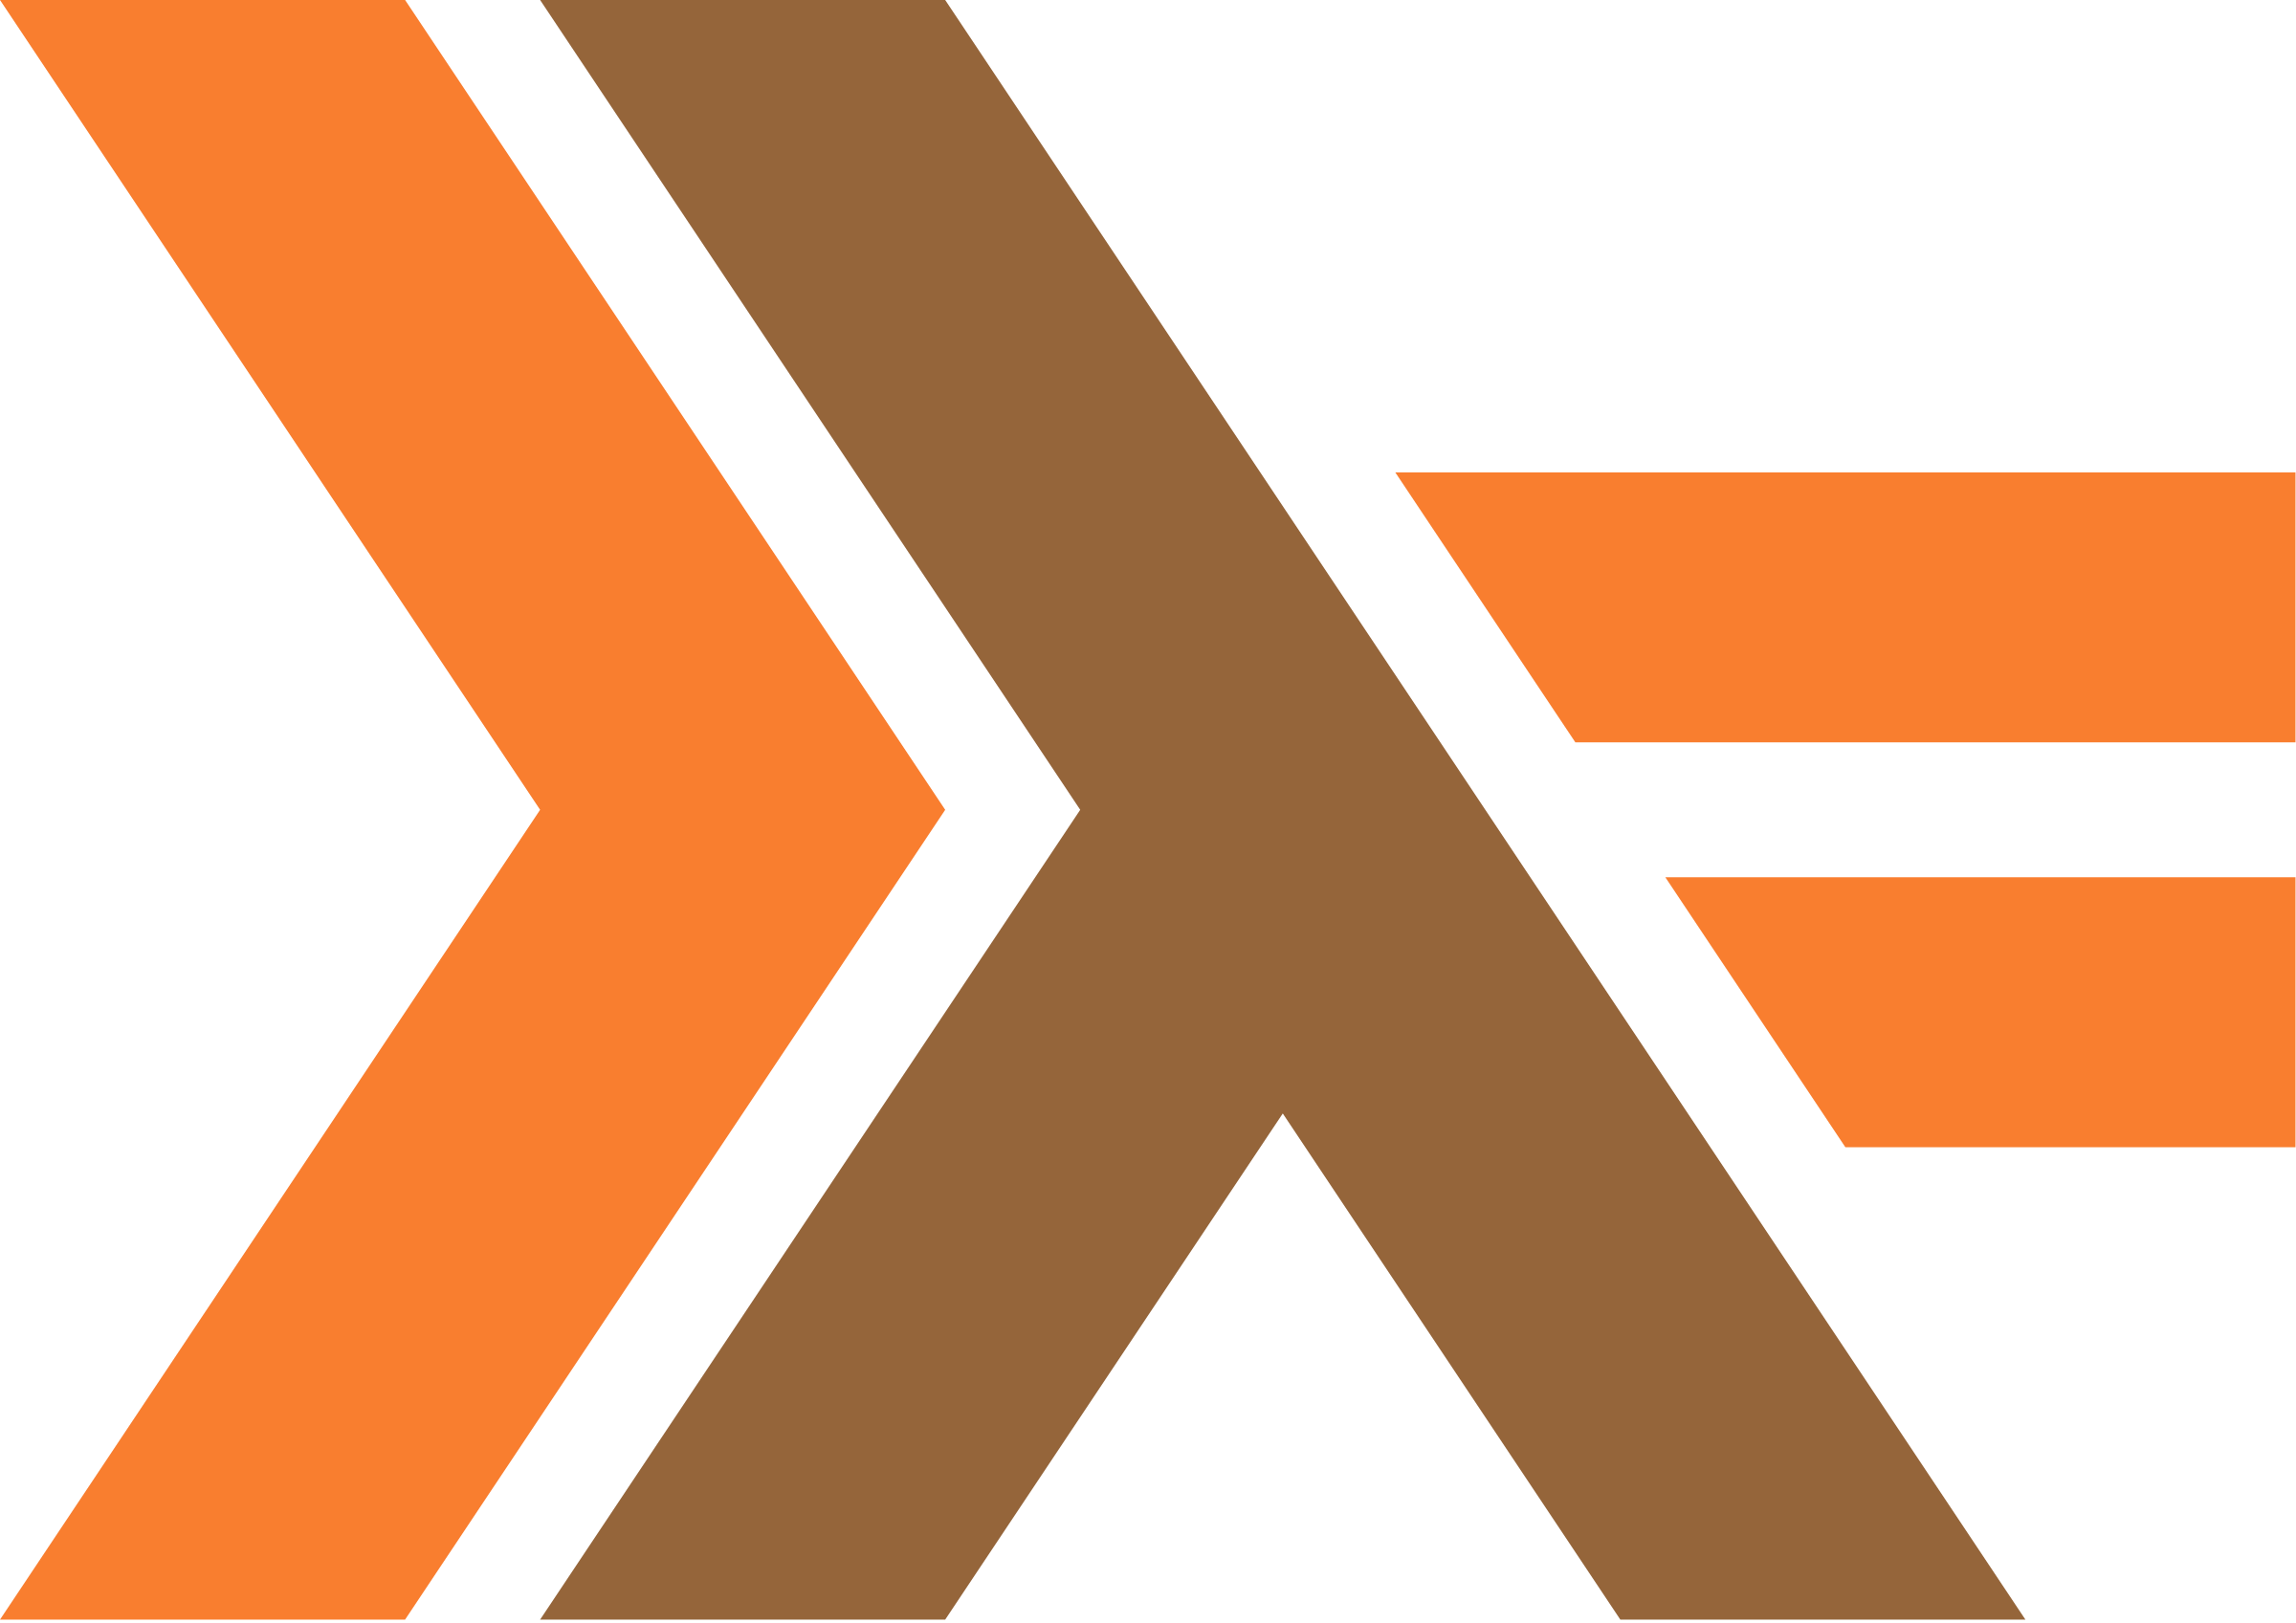 Haskell Logo - Haskell Logo PNG Transparent & SVG Vector - Freebie Supply